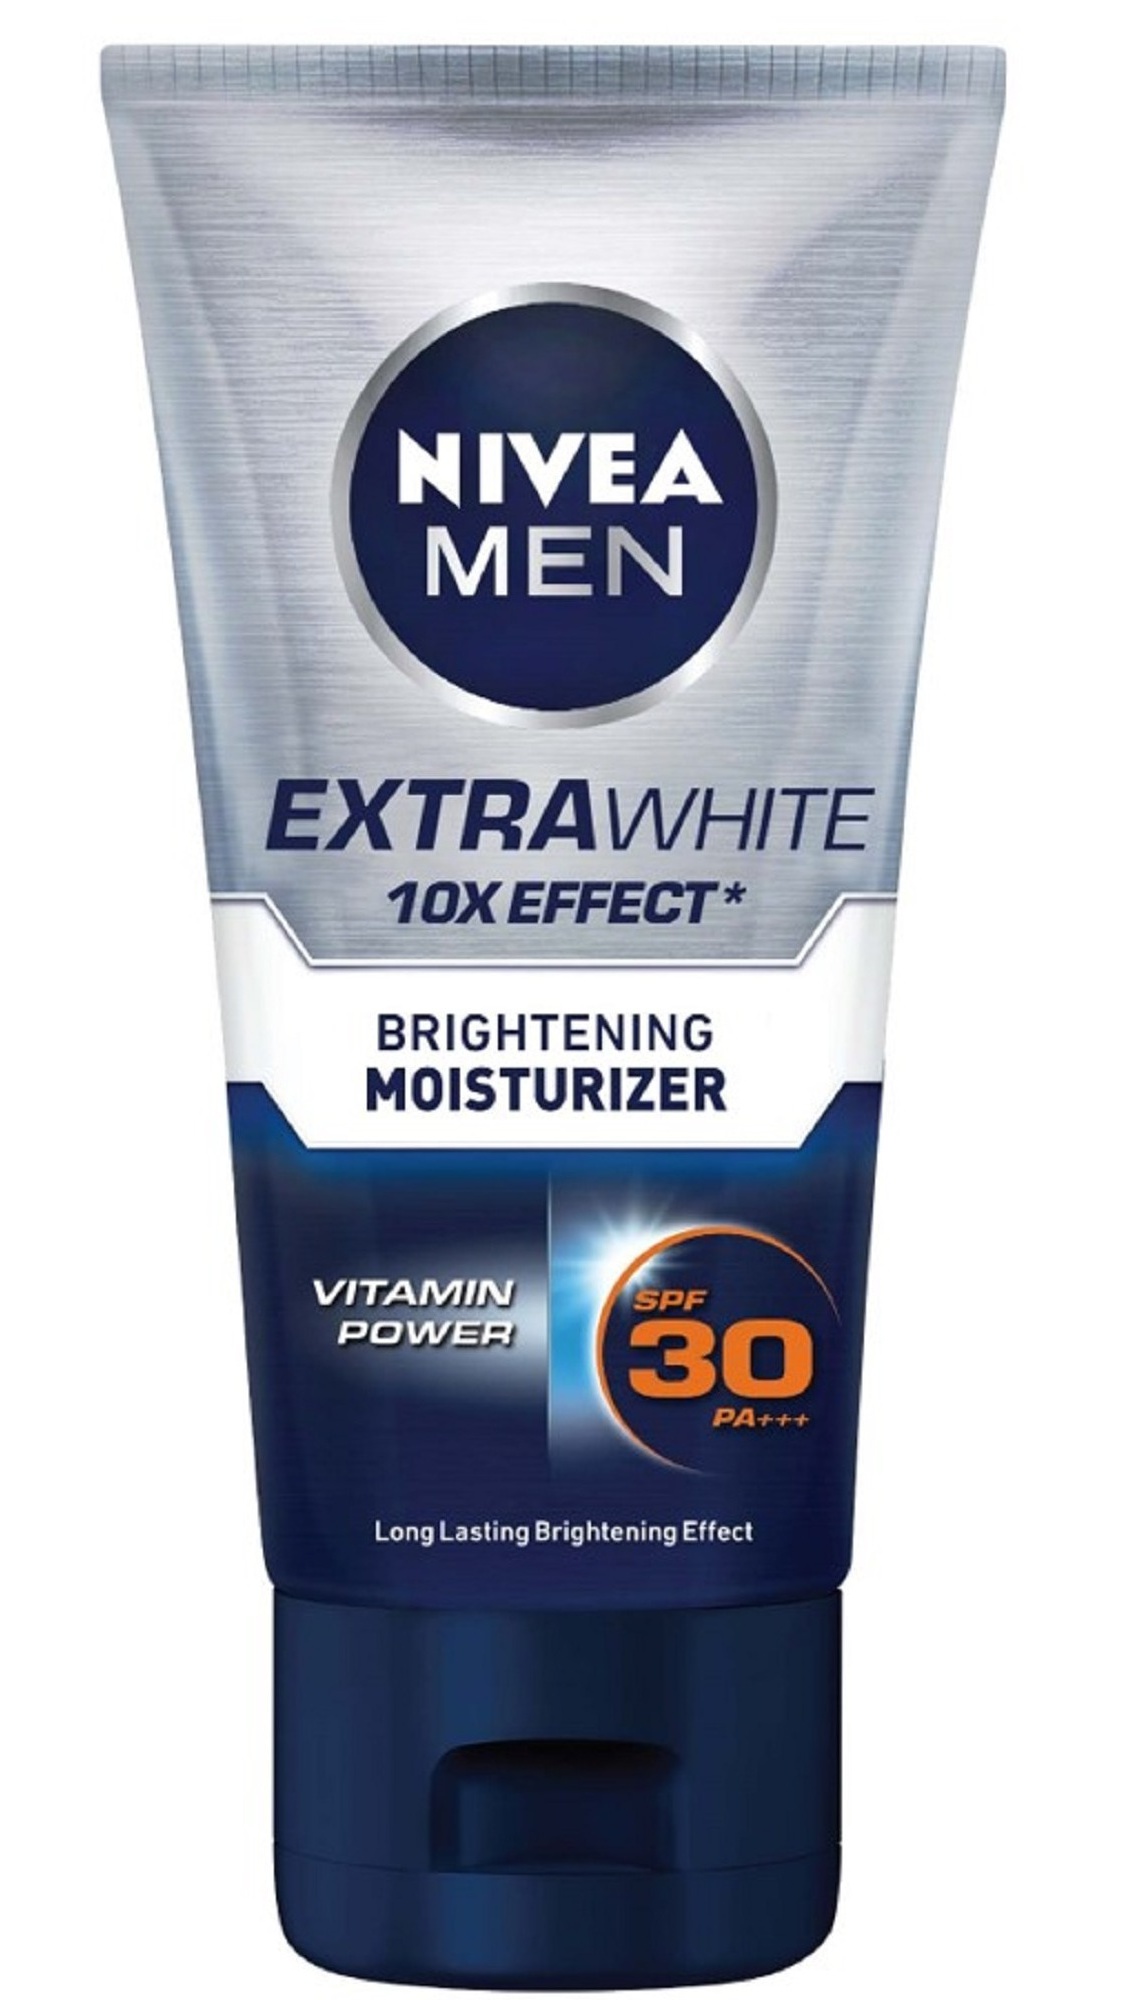 NIVEA MEN Extra White 10x Effect Face Moisturizer With SPF 30